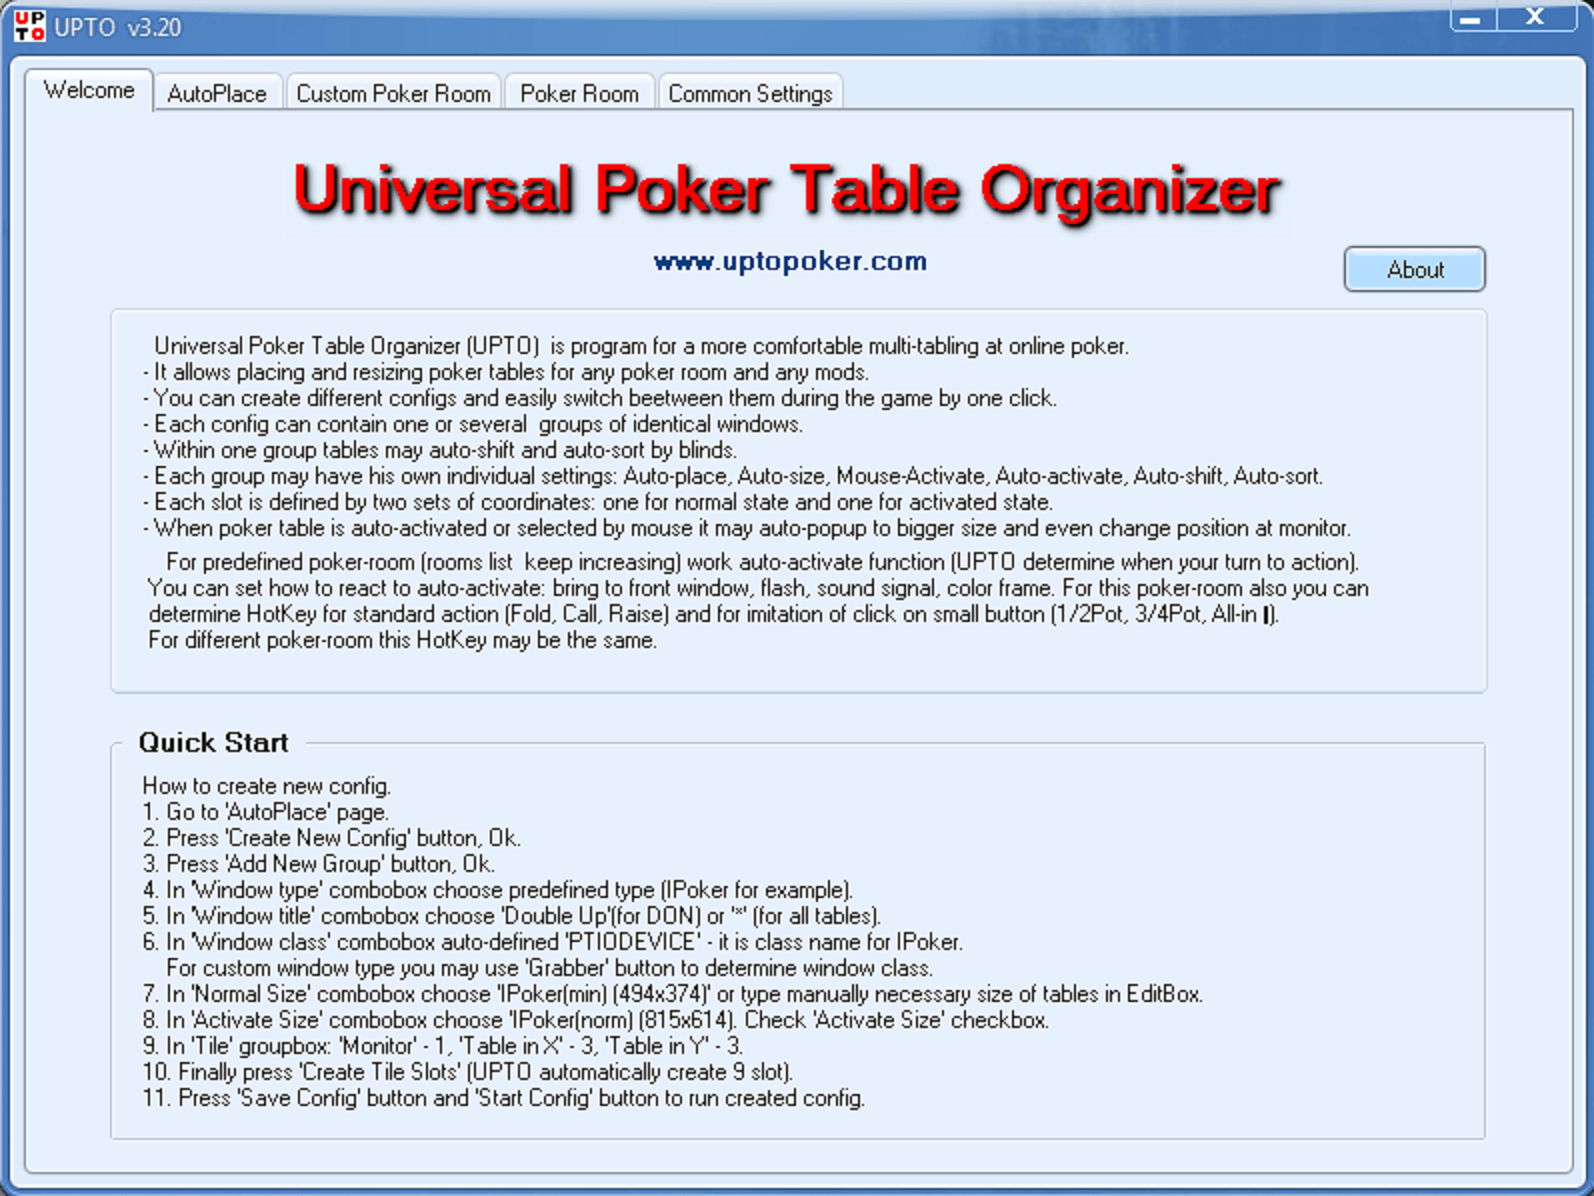 universal Poker Table Organizer(UPTO) - Welcome